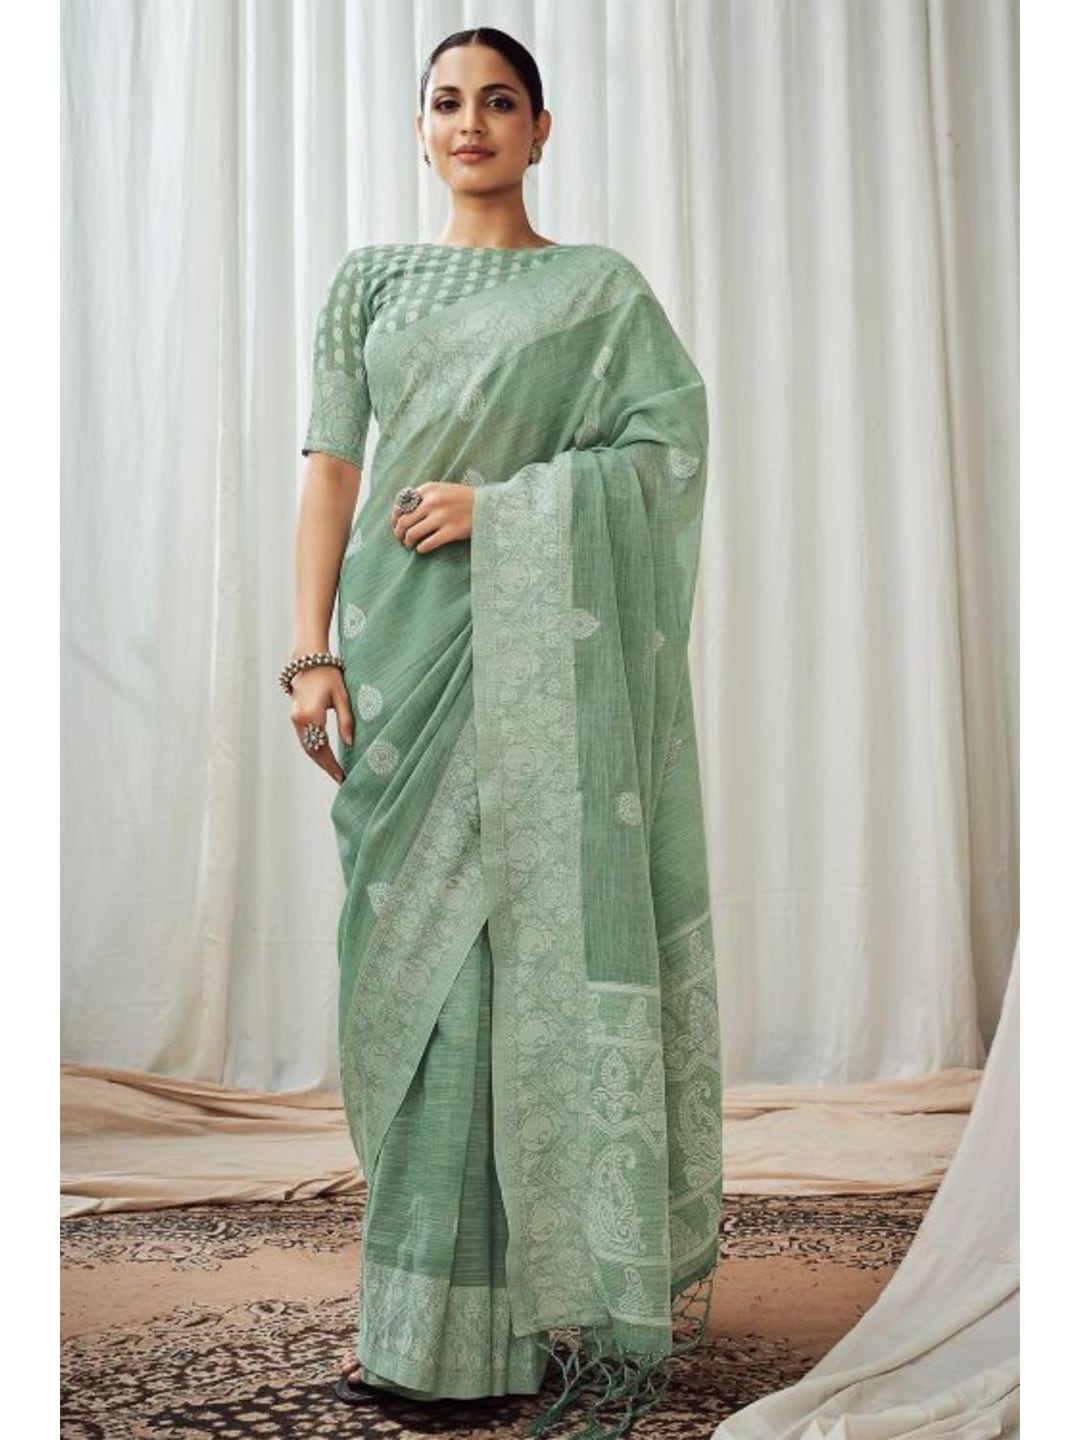 KARAGIRI Green & White Paisley Saree Price in India